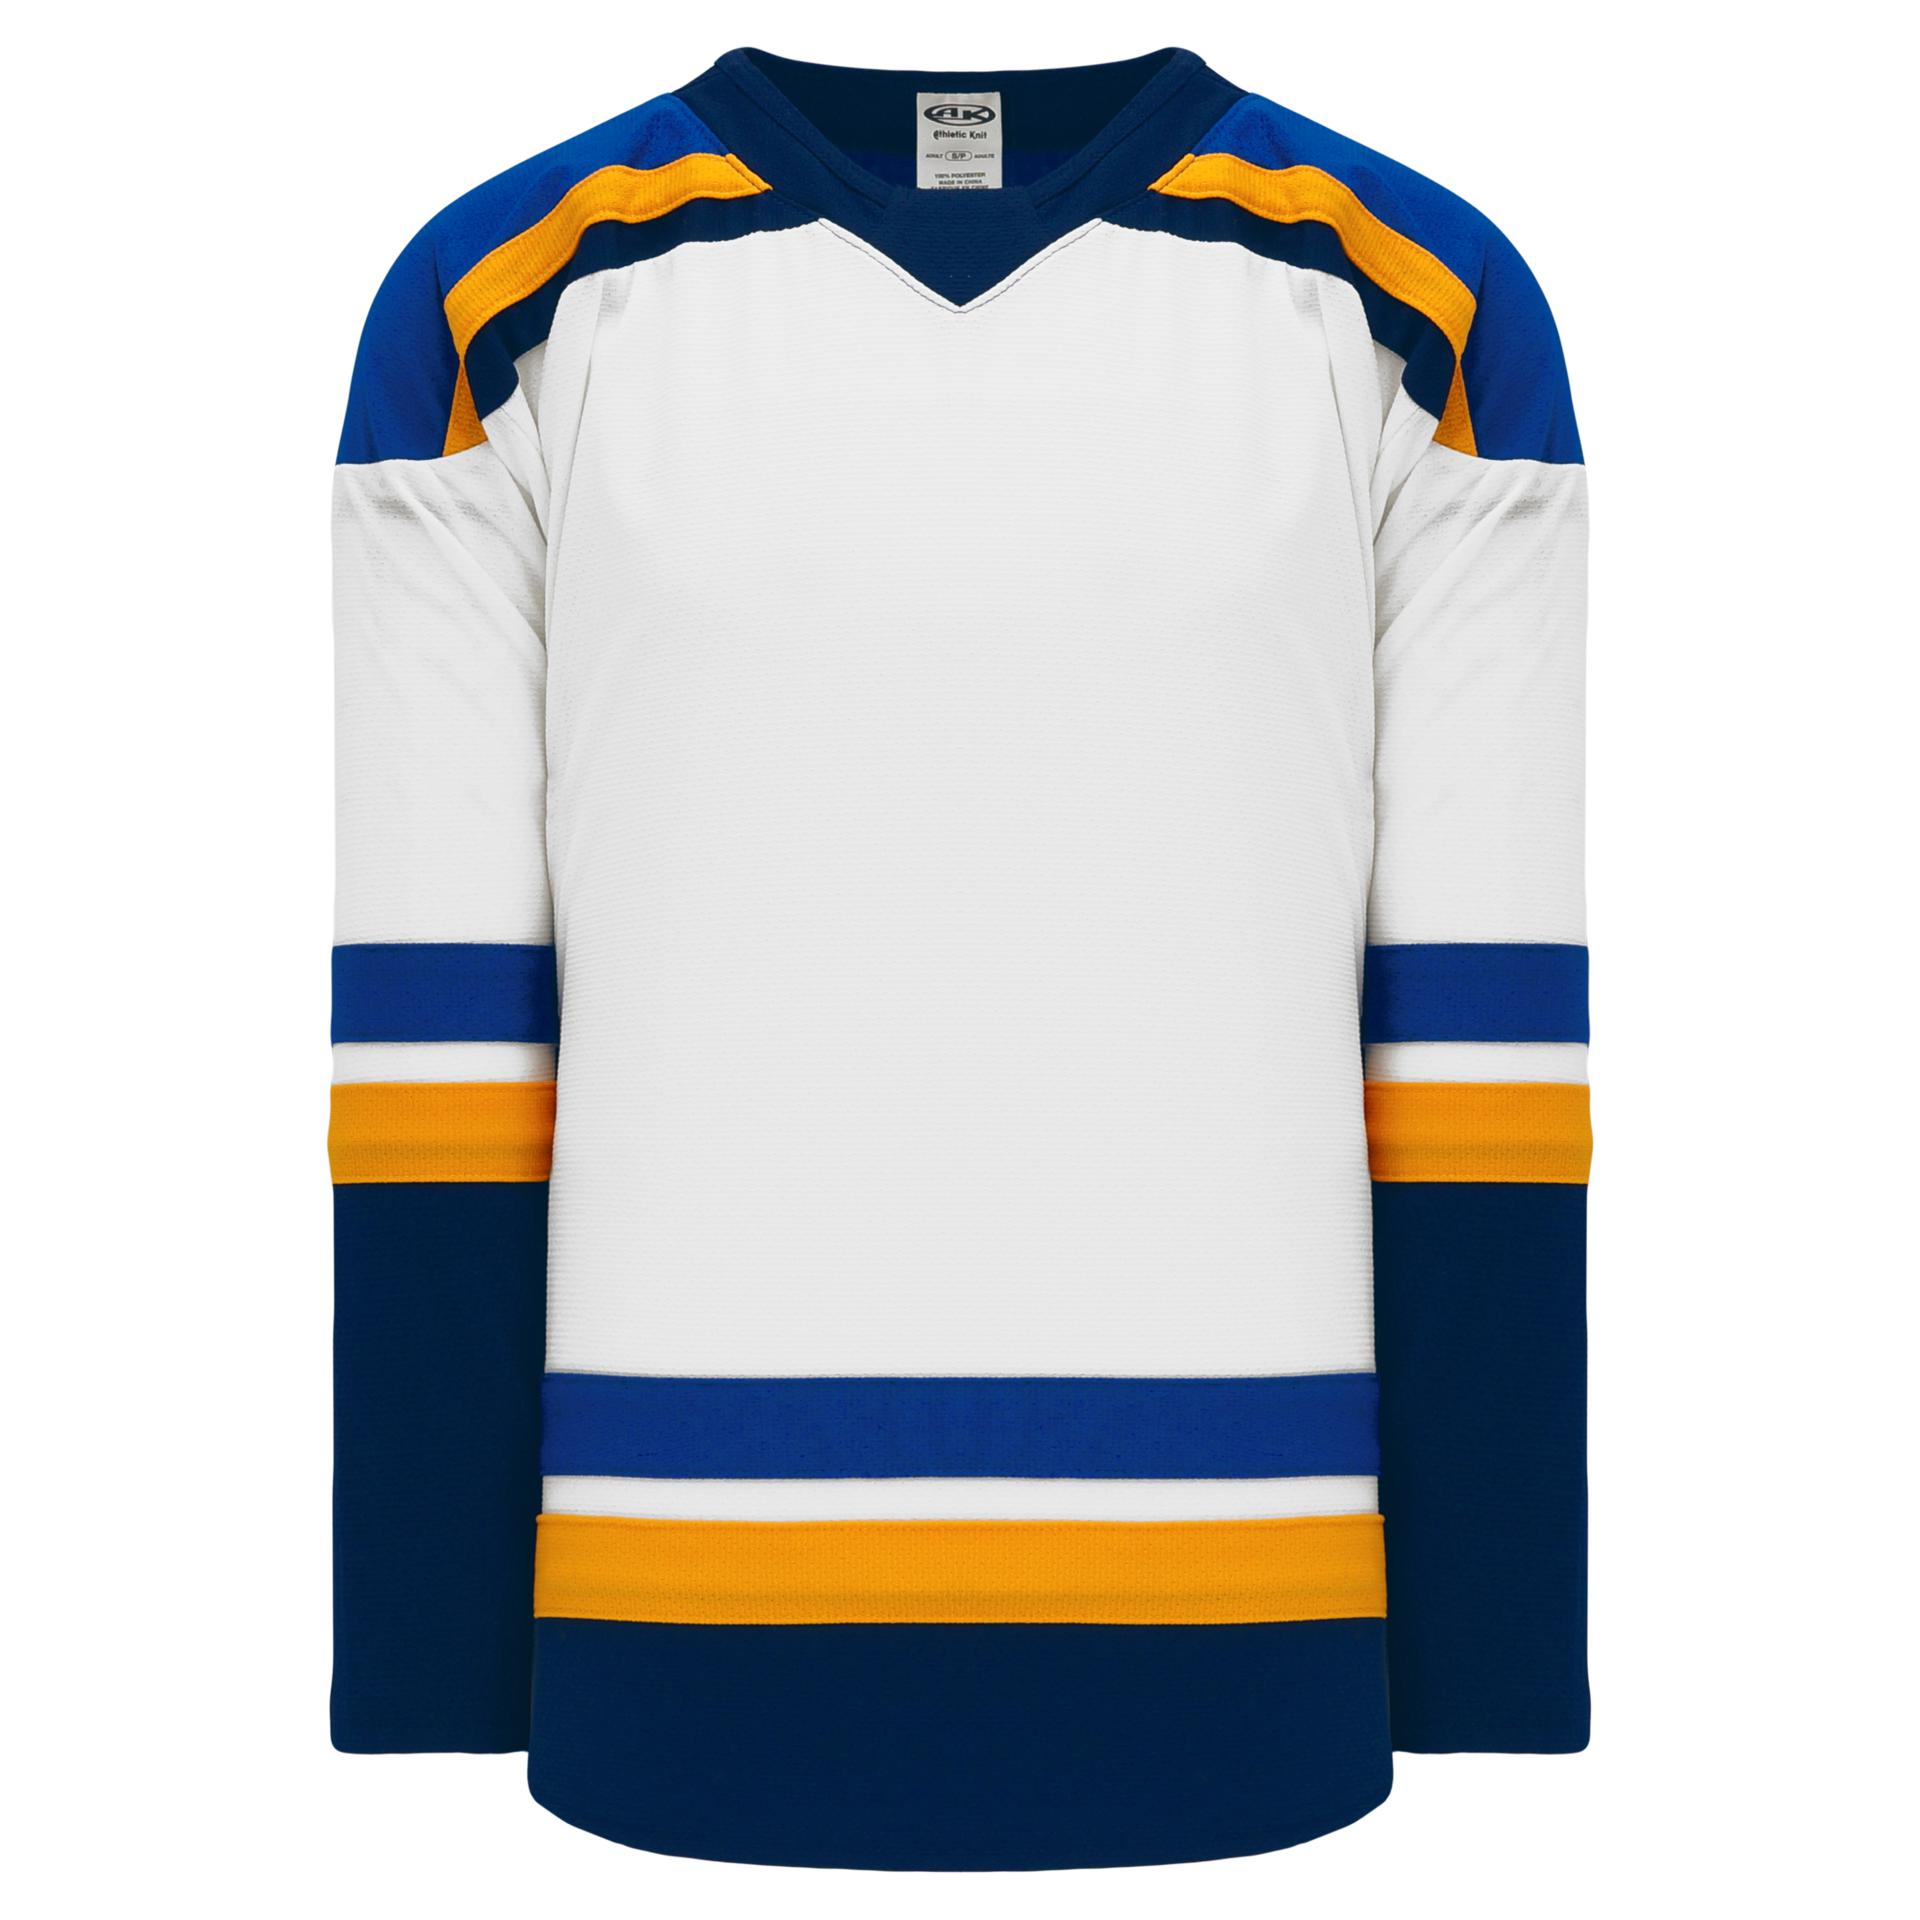 St. Louis Blues: NHL Should Return To Home White Uniforms